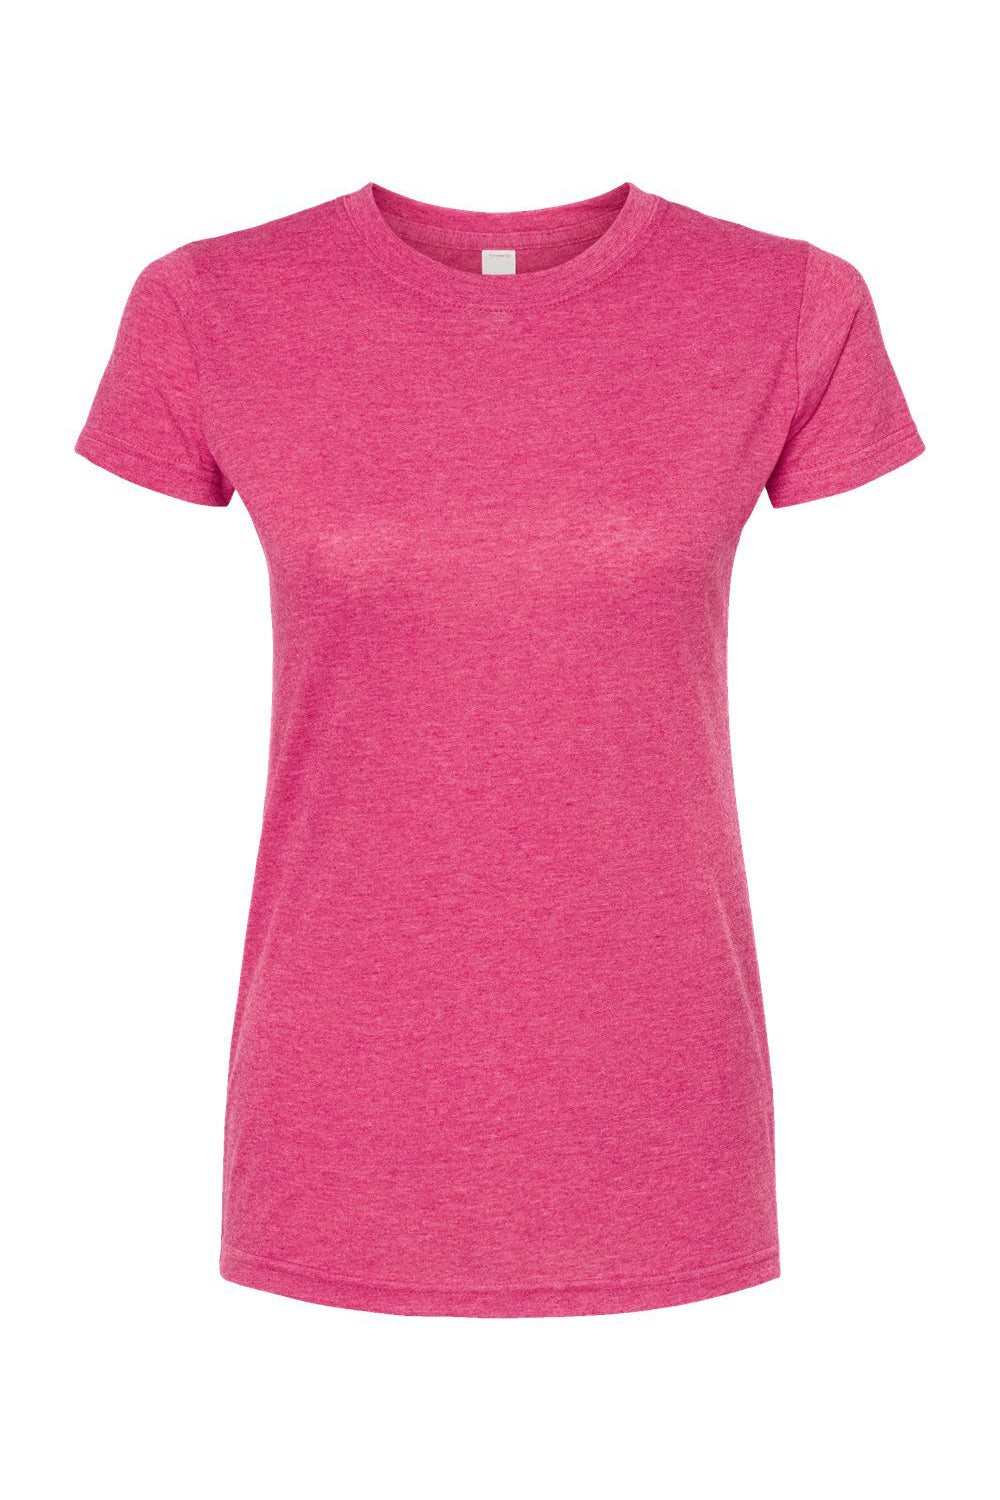 Tultex 240 Womens Poly-Rich Short Sleeve Crewneck T-Shirt Heather Fuchsia Pink Flat Front